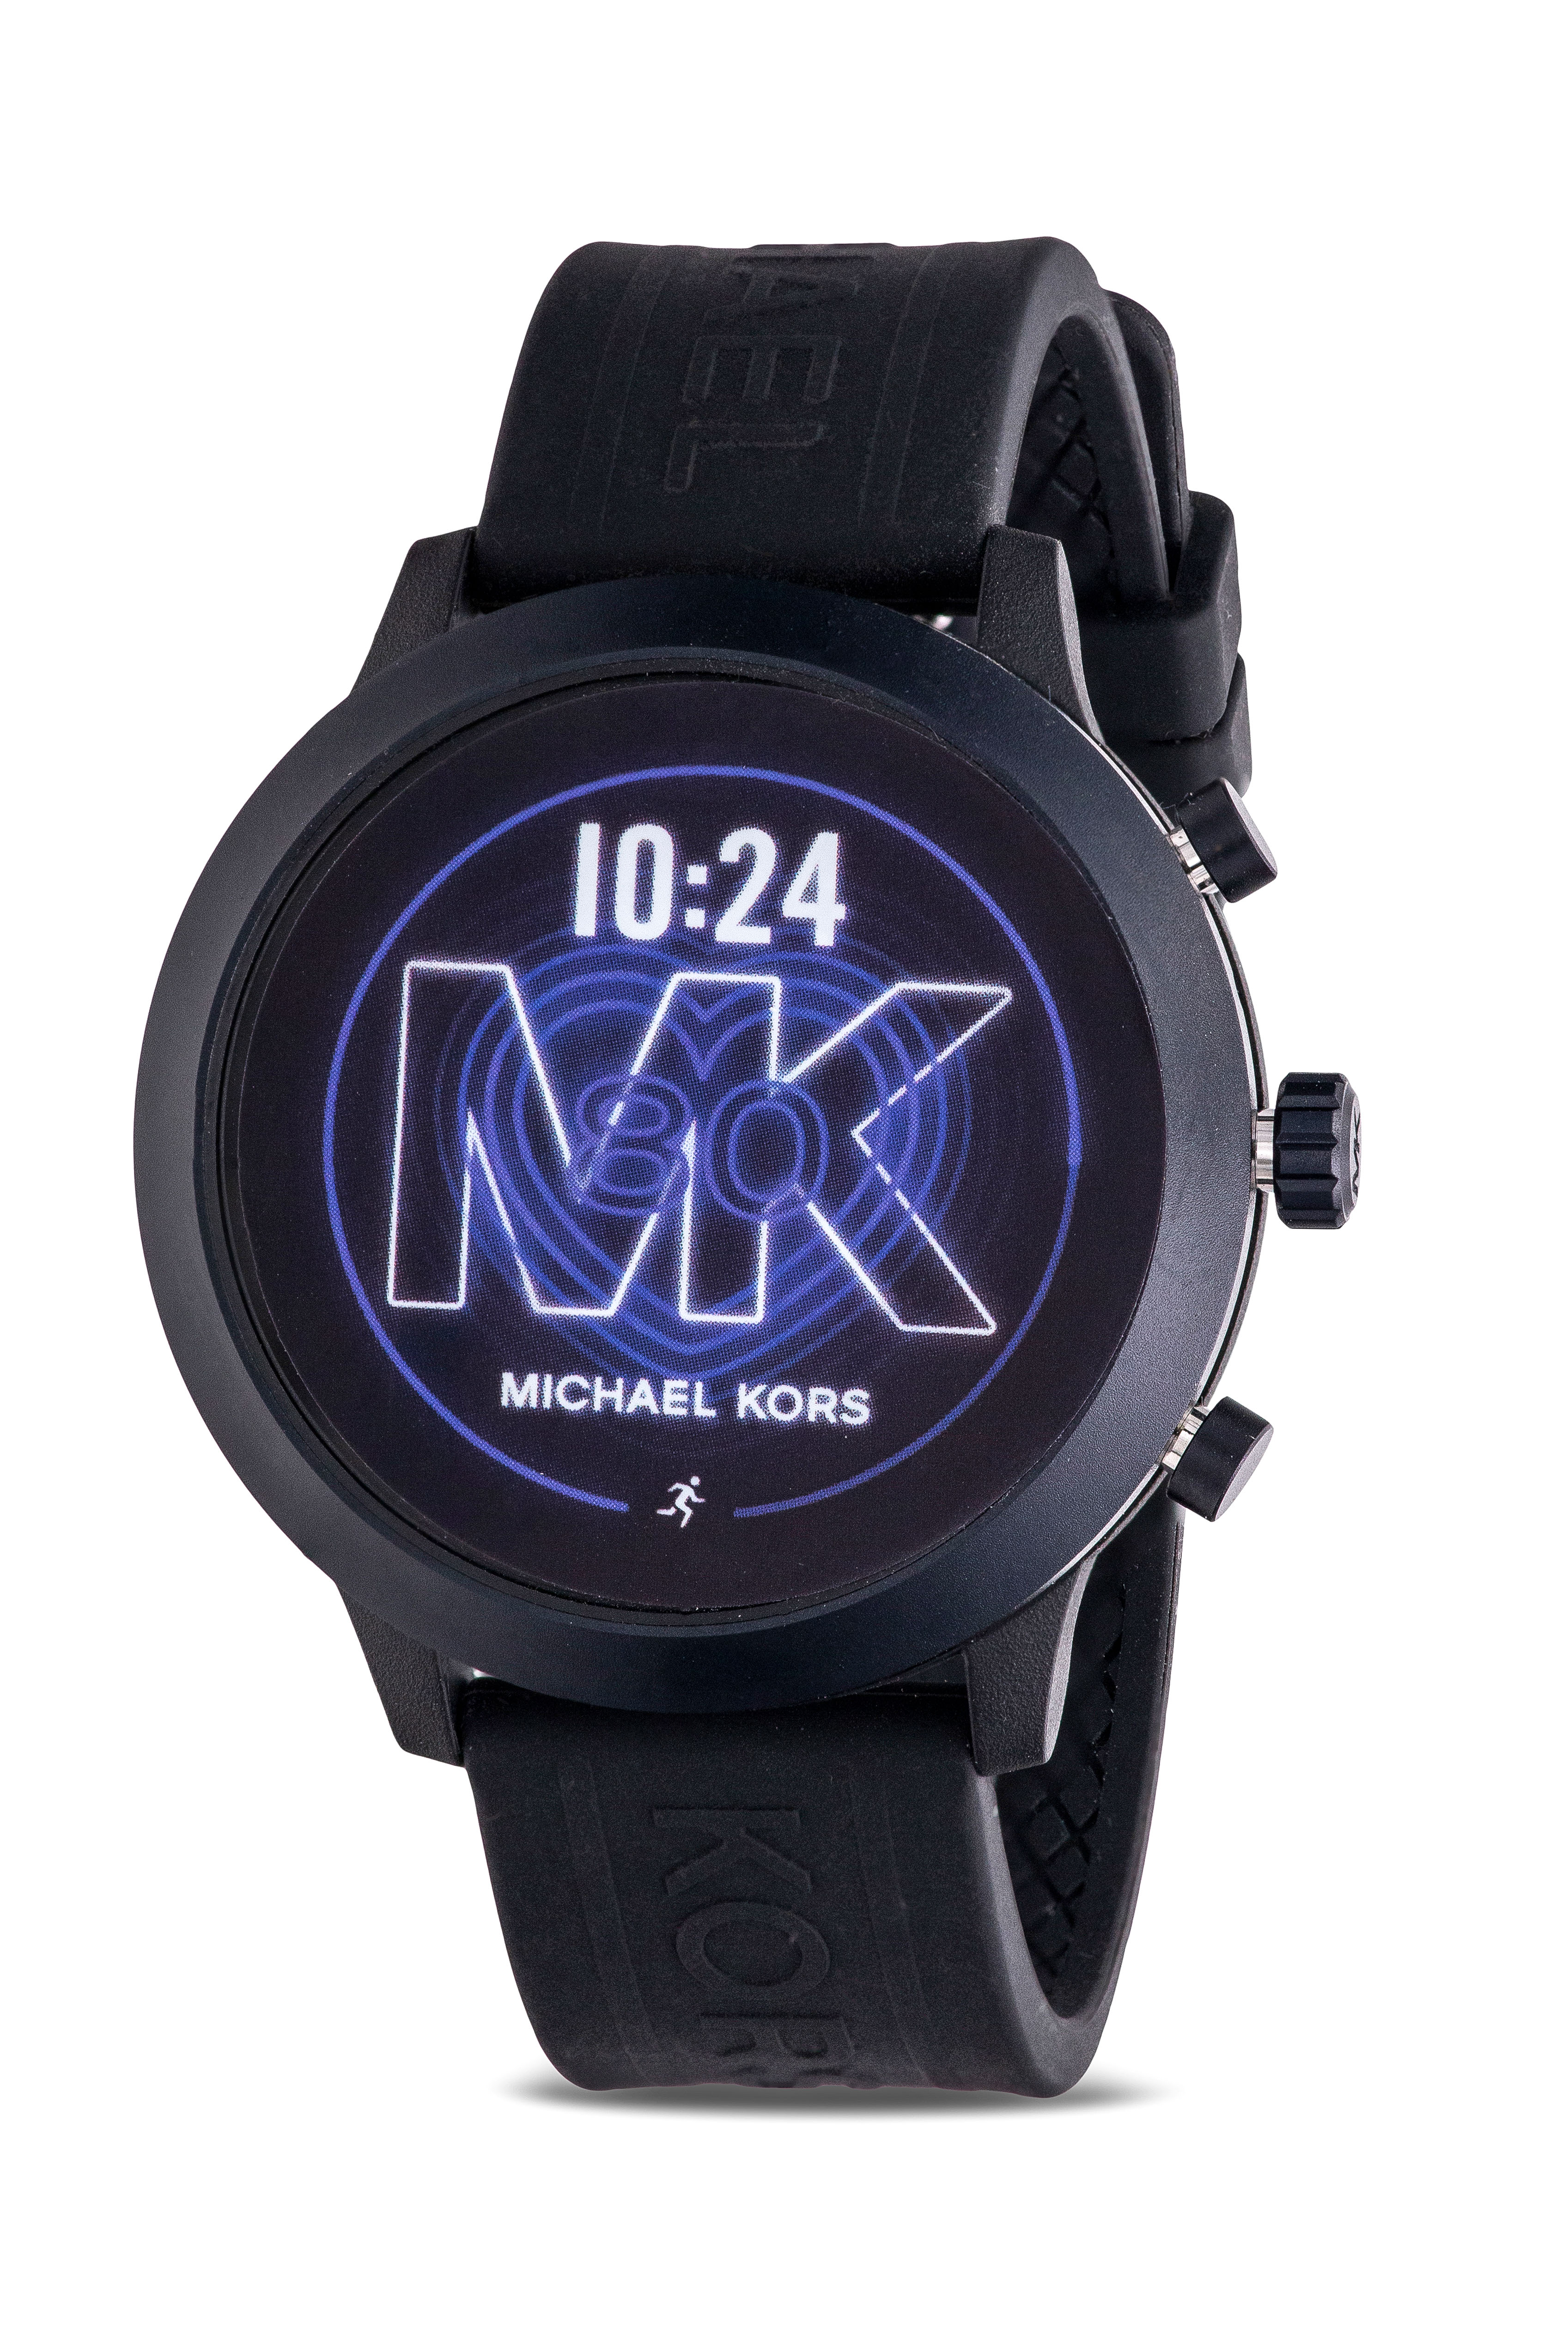 michael kors smart watch ebay